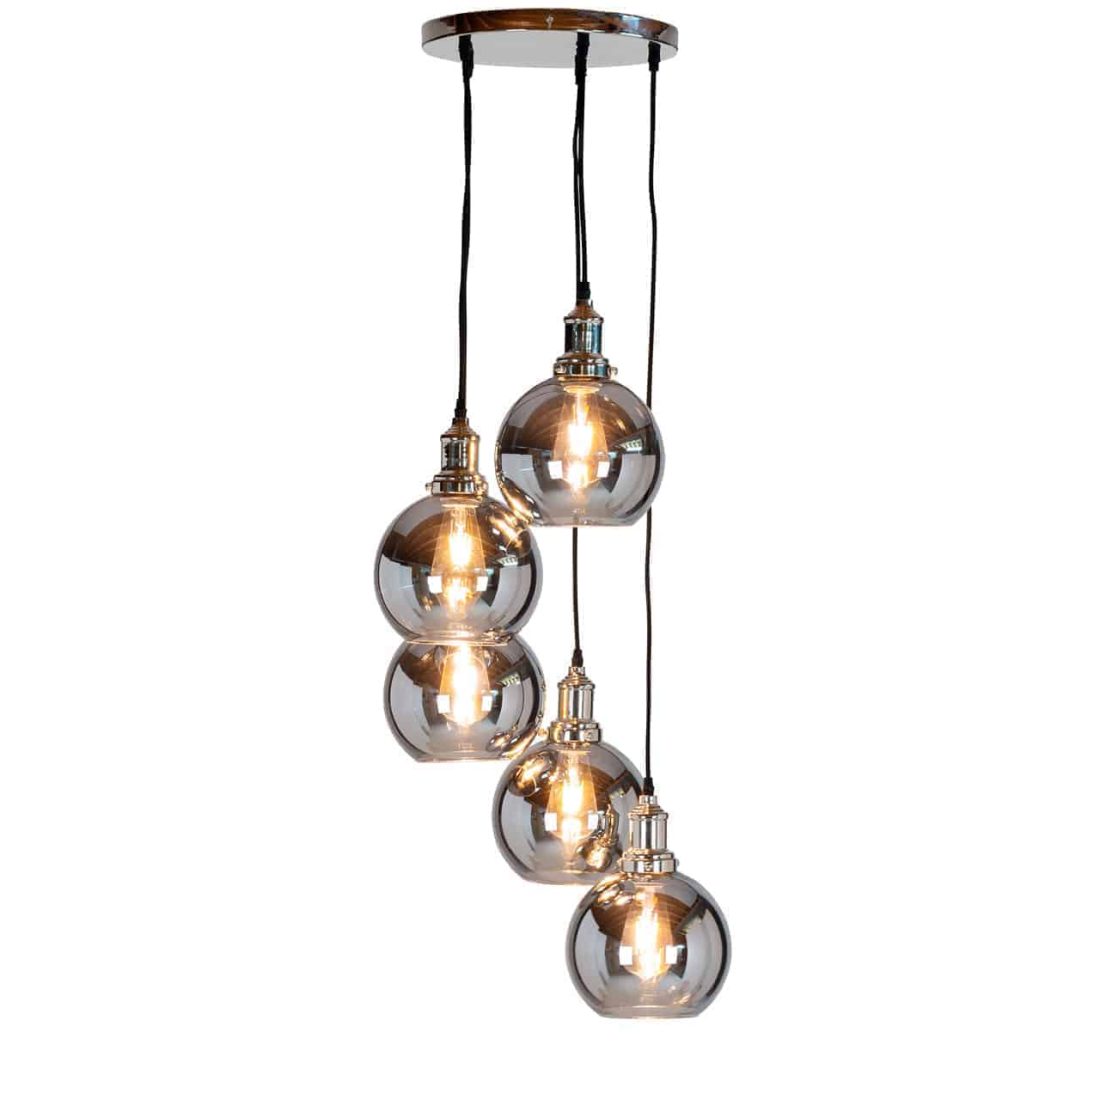 Richmond Interiors hanglamp 45x45x100 cm Camdon glas